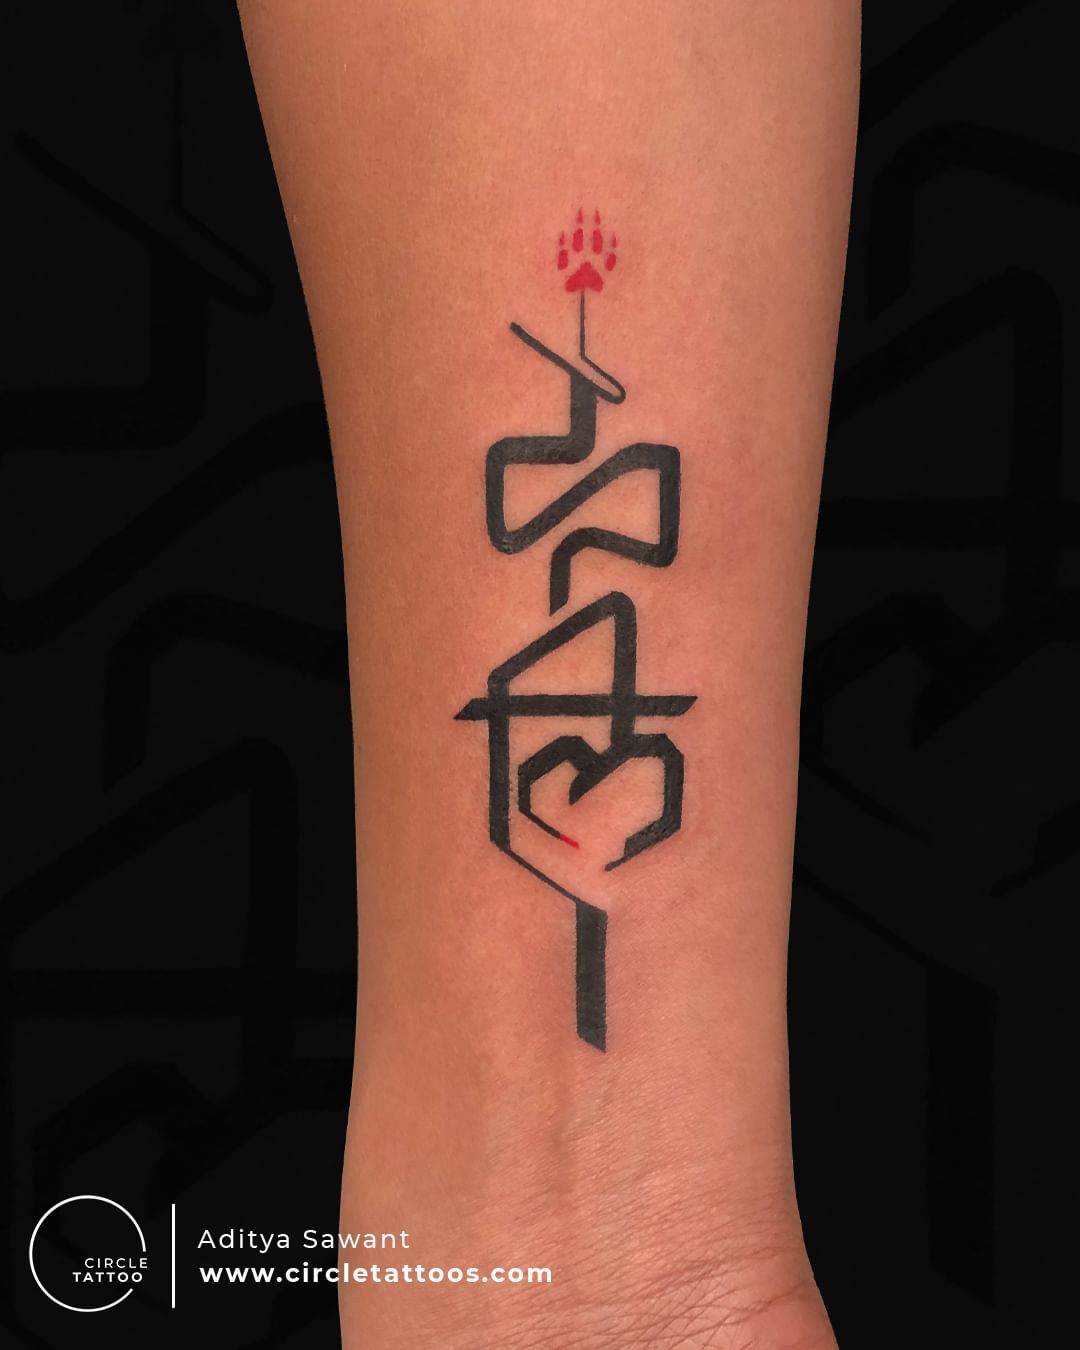 Hindi name tattoo | Tattoo fonts, Tattoos, Tattoos for guys